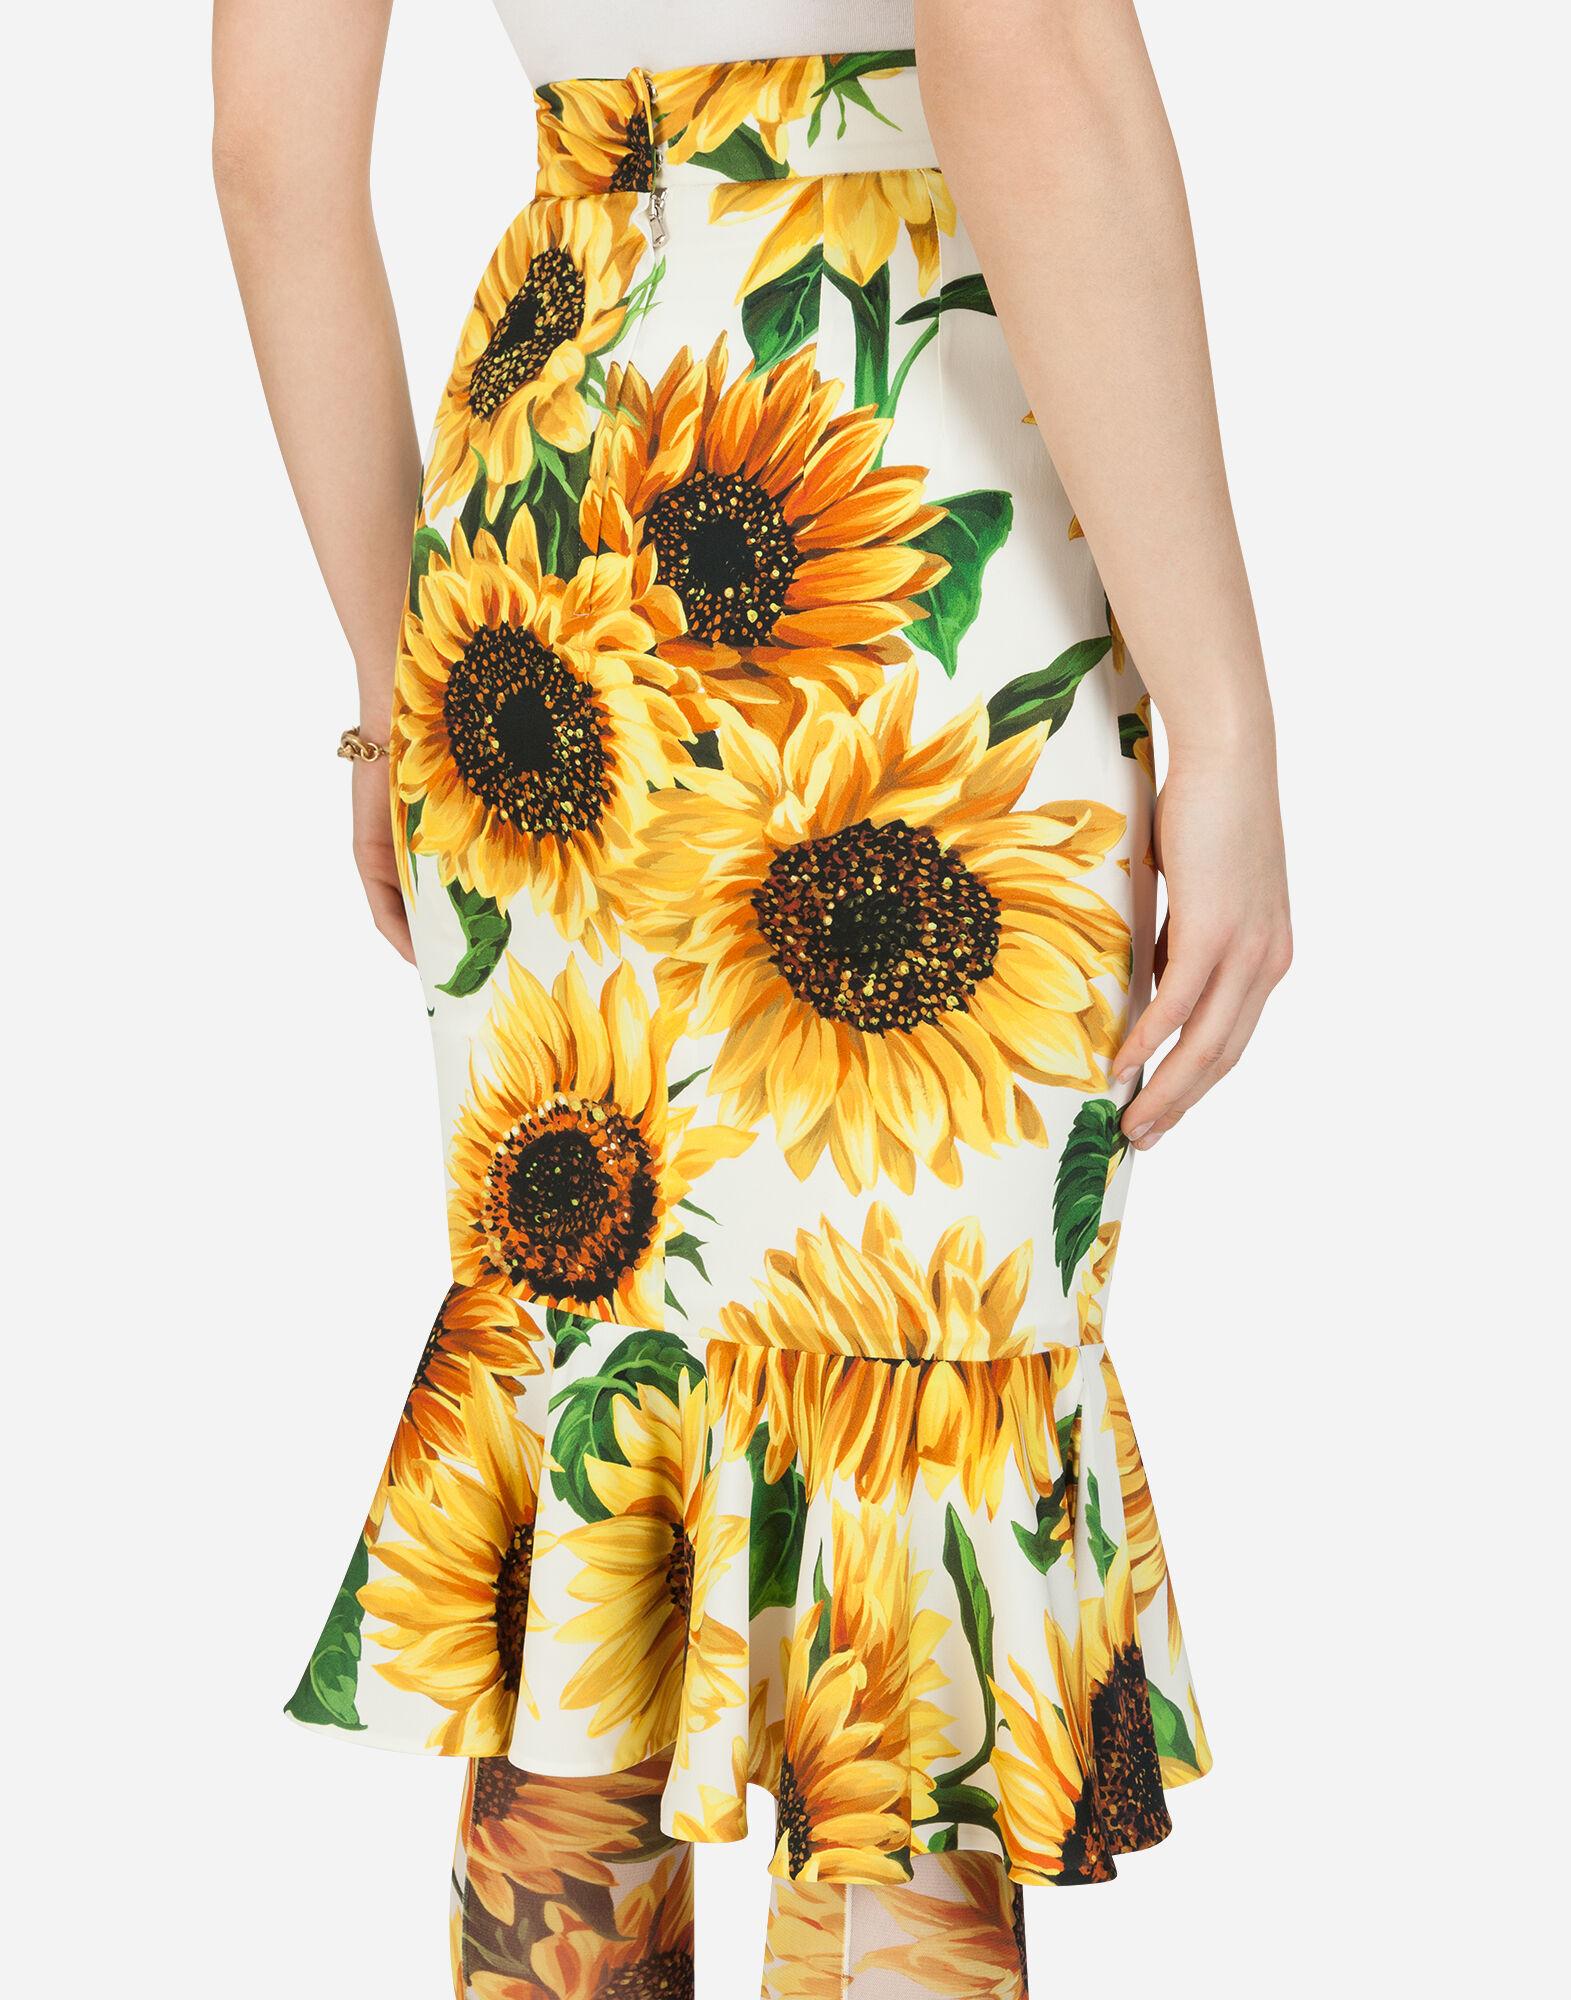 Dolce & Gabbana Silk Sunflower Skirt in Floral Print (Yellow) - Lyst